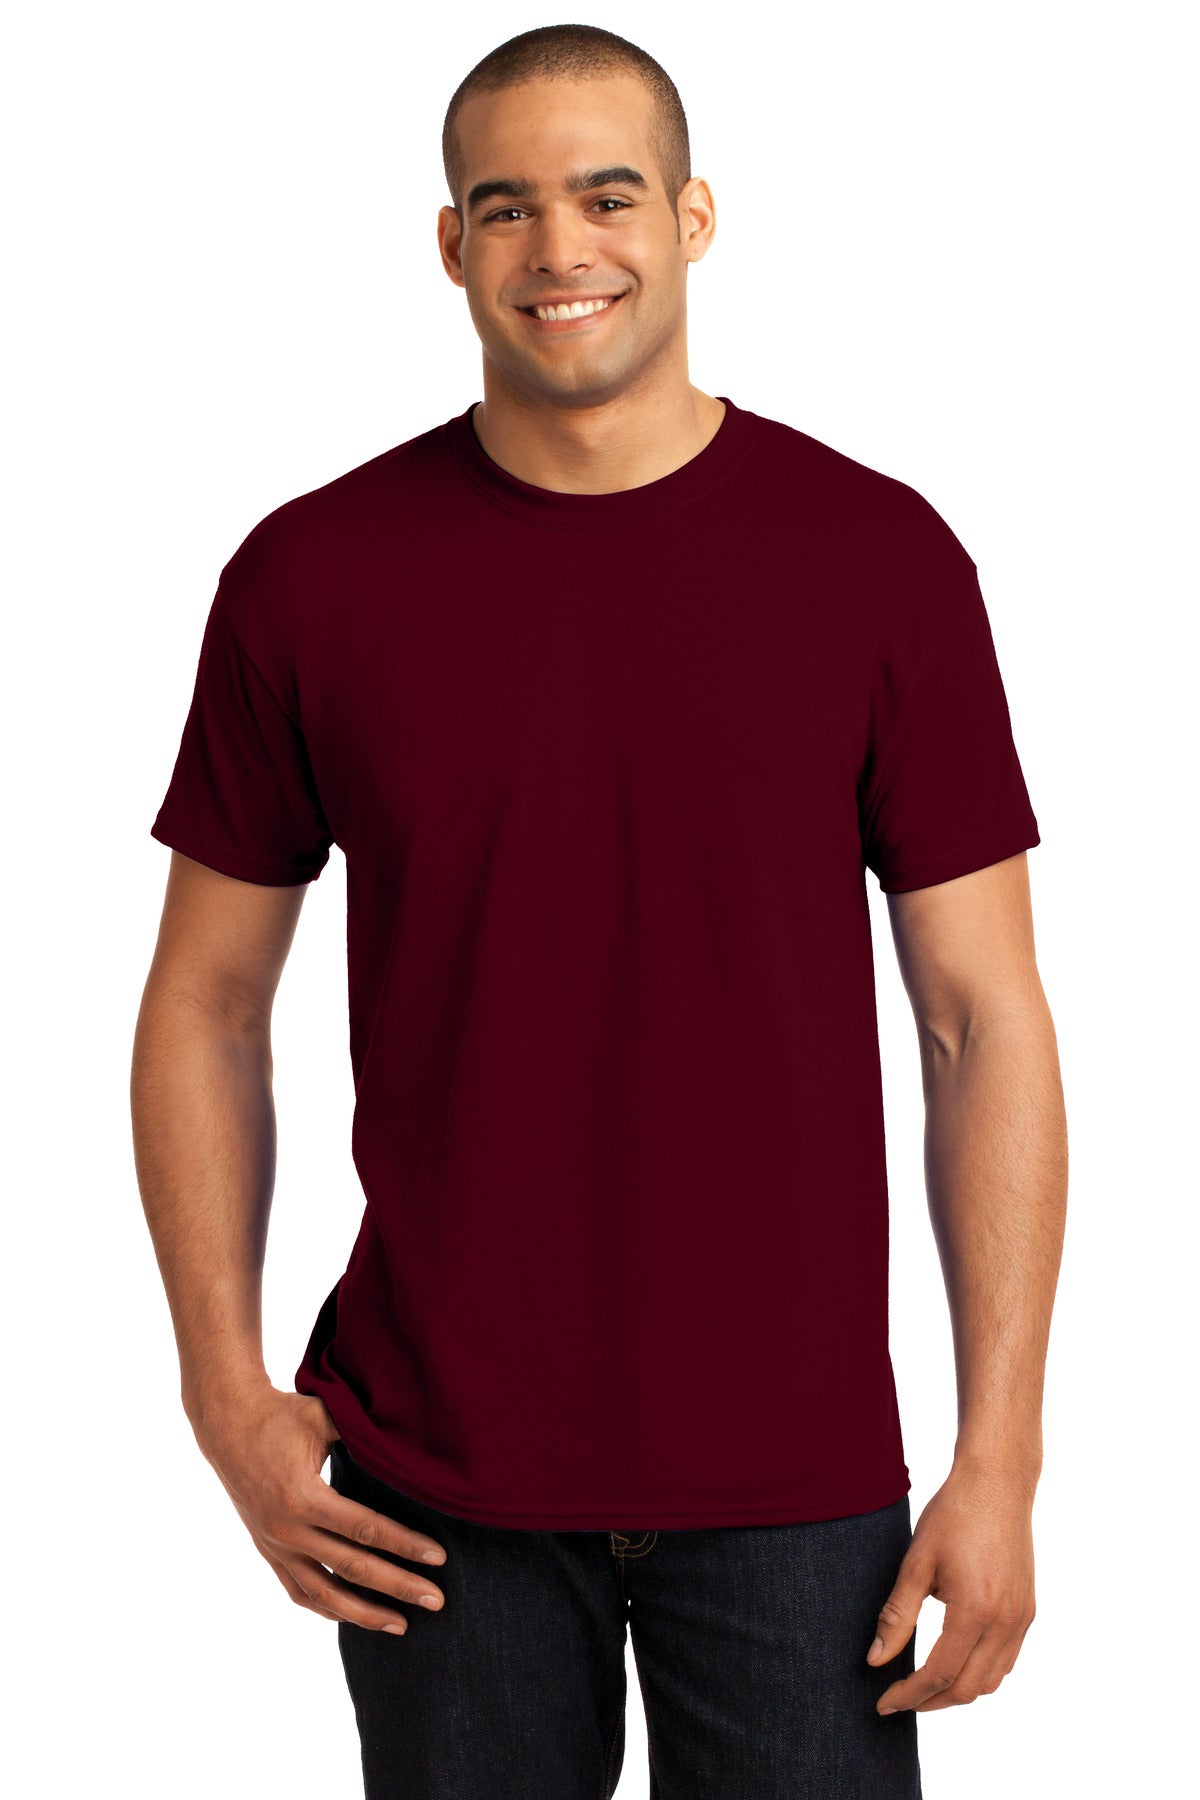 Hanes® - EcoSmart® 50/50 Cotton/Poly T-Shirt. 5170 [Maroon] - DFW Impression